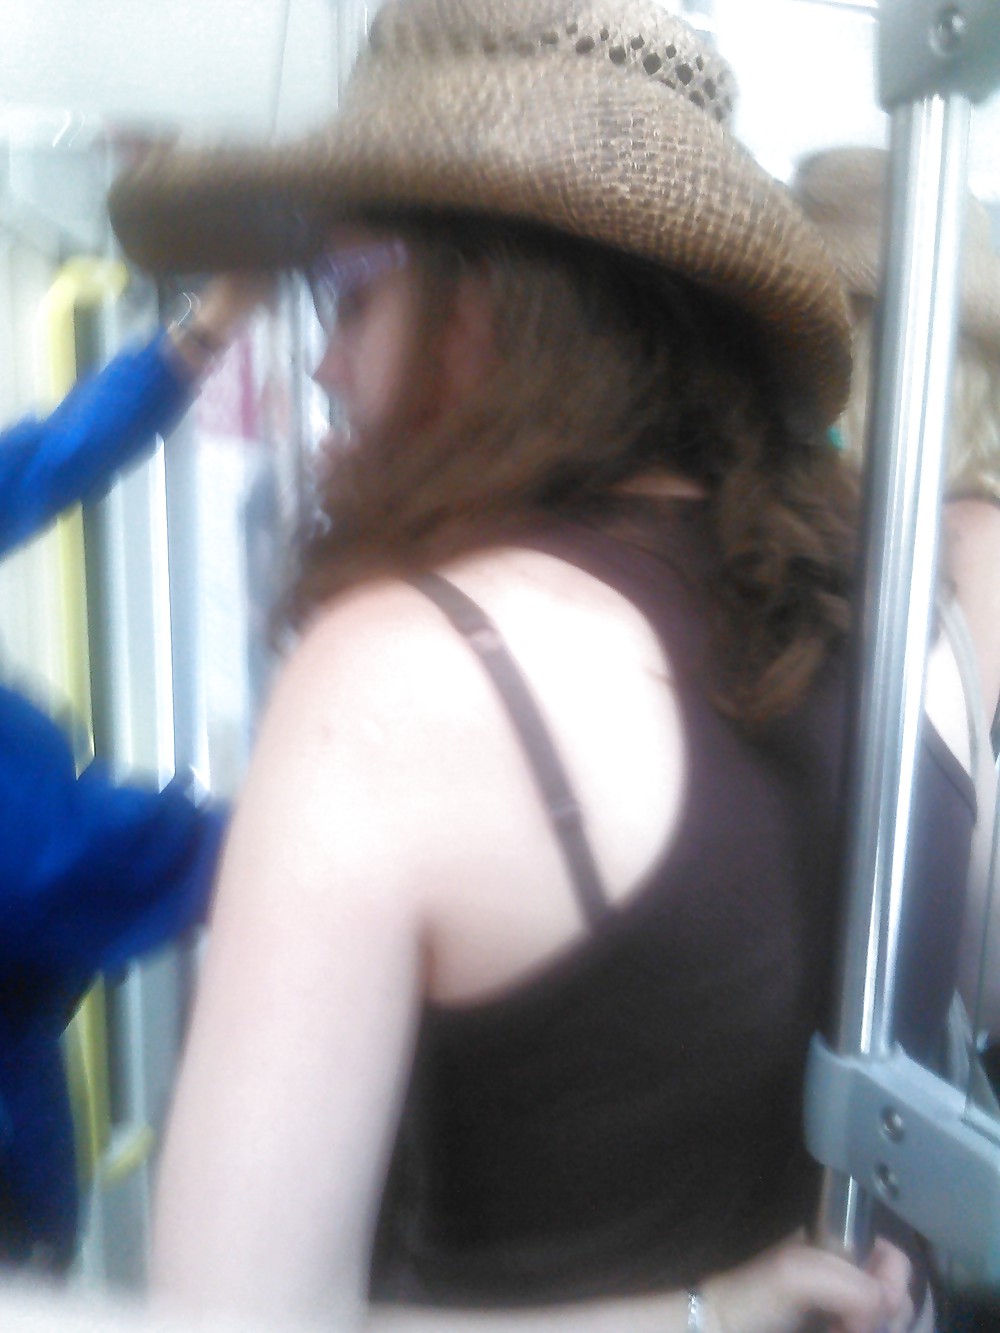 More voyeur pics on the train #37677434